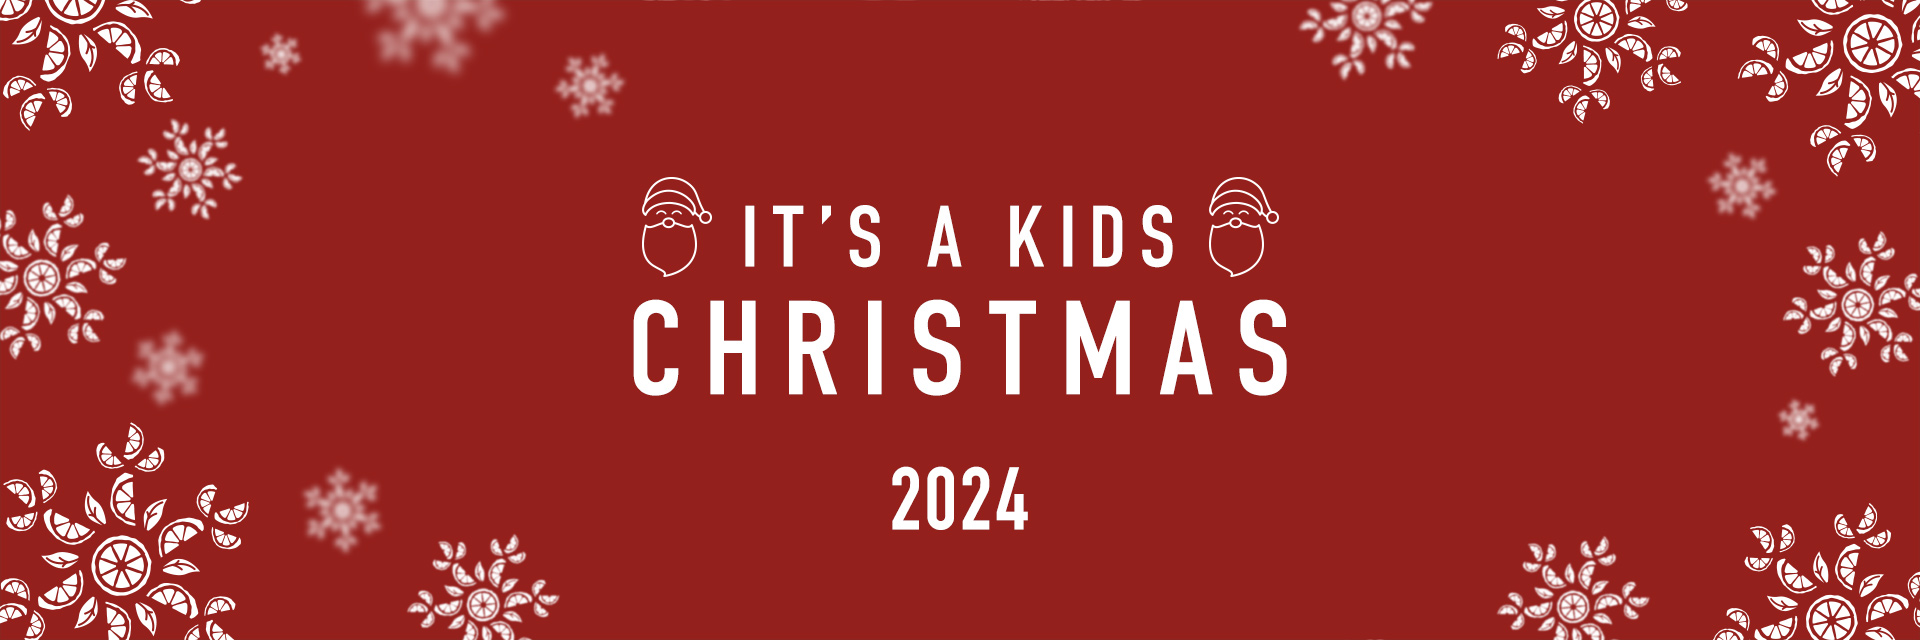 Kids Christmas Menu 2024 at Harvester Chesterfield